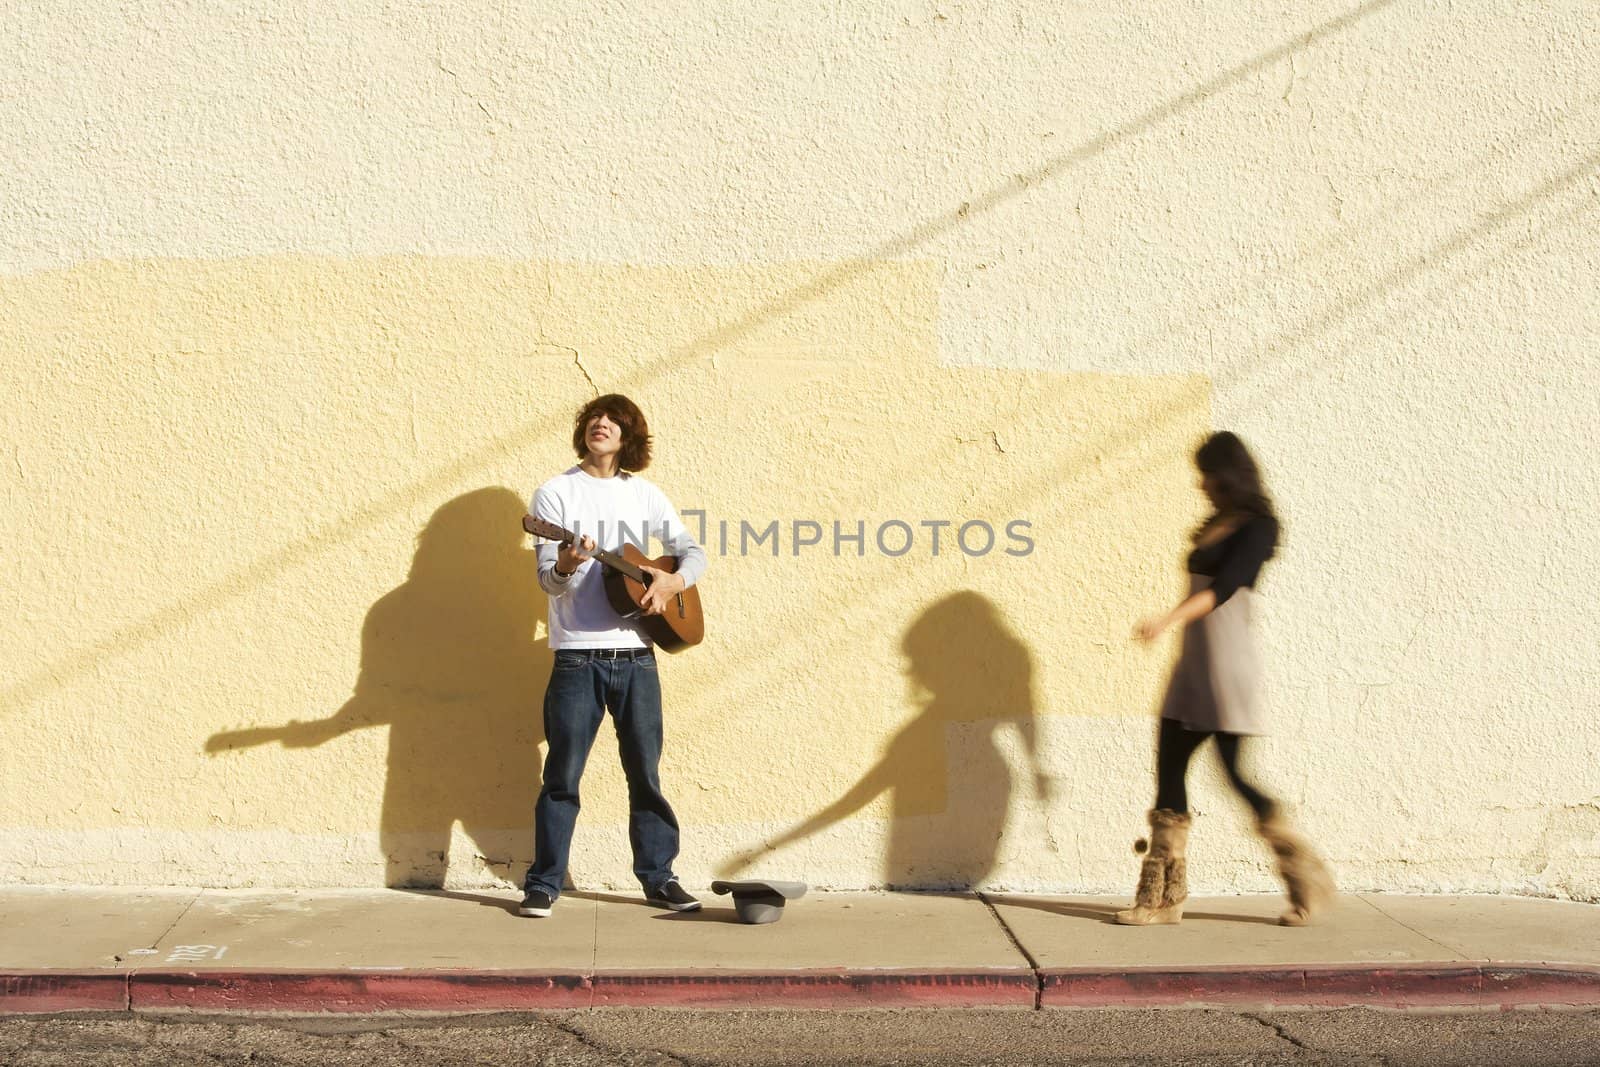 Musician on Sidewalk and Woman Pedestrian by Creatista